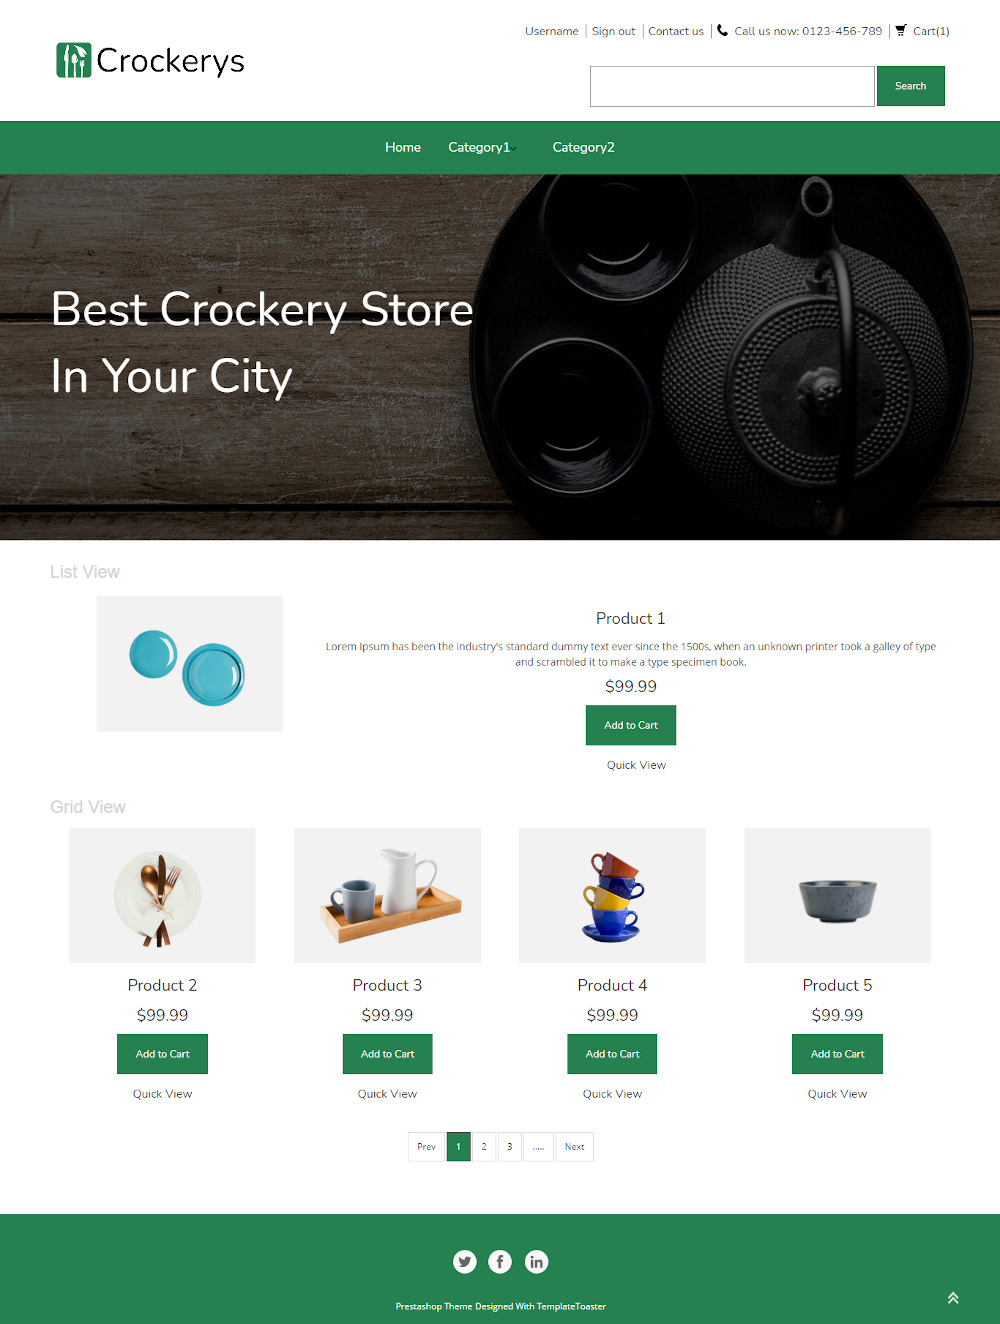 Crockerys - Online Crockery Store PrestaShop Theme